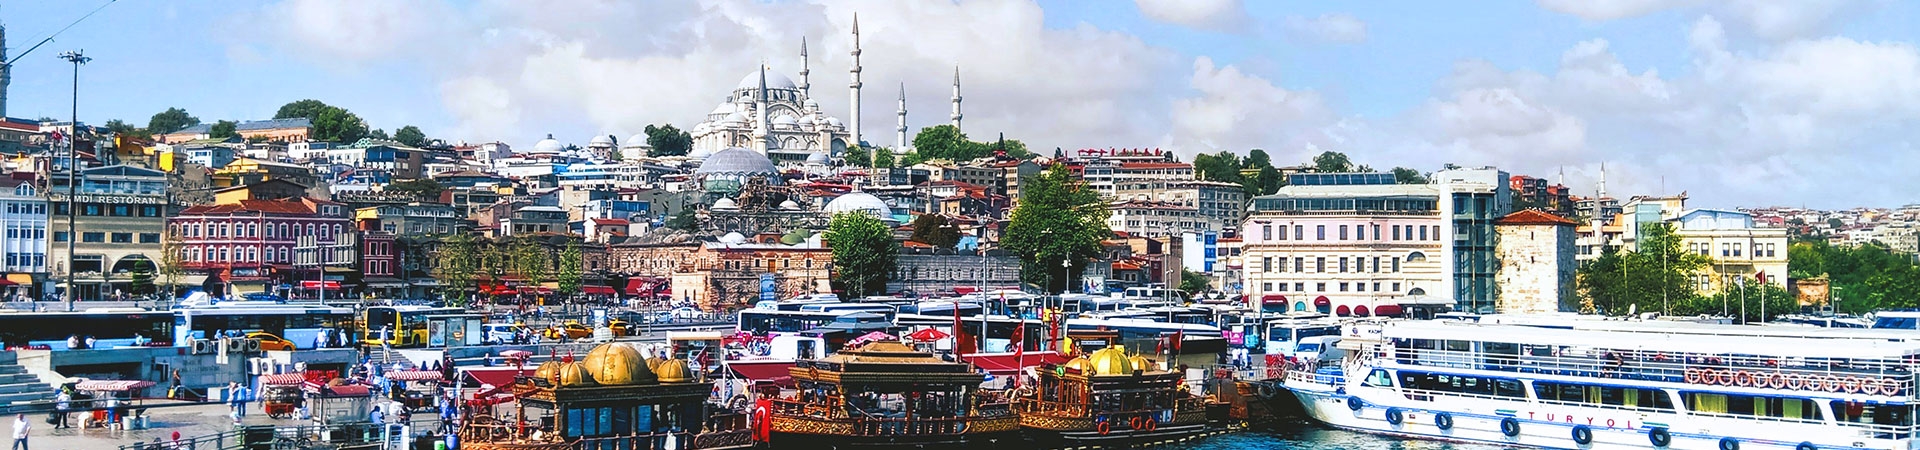 تور استانبول فروردین